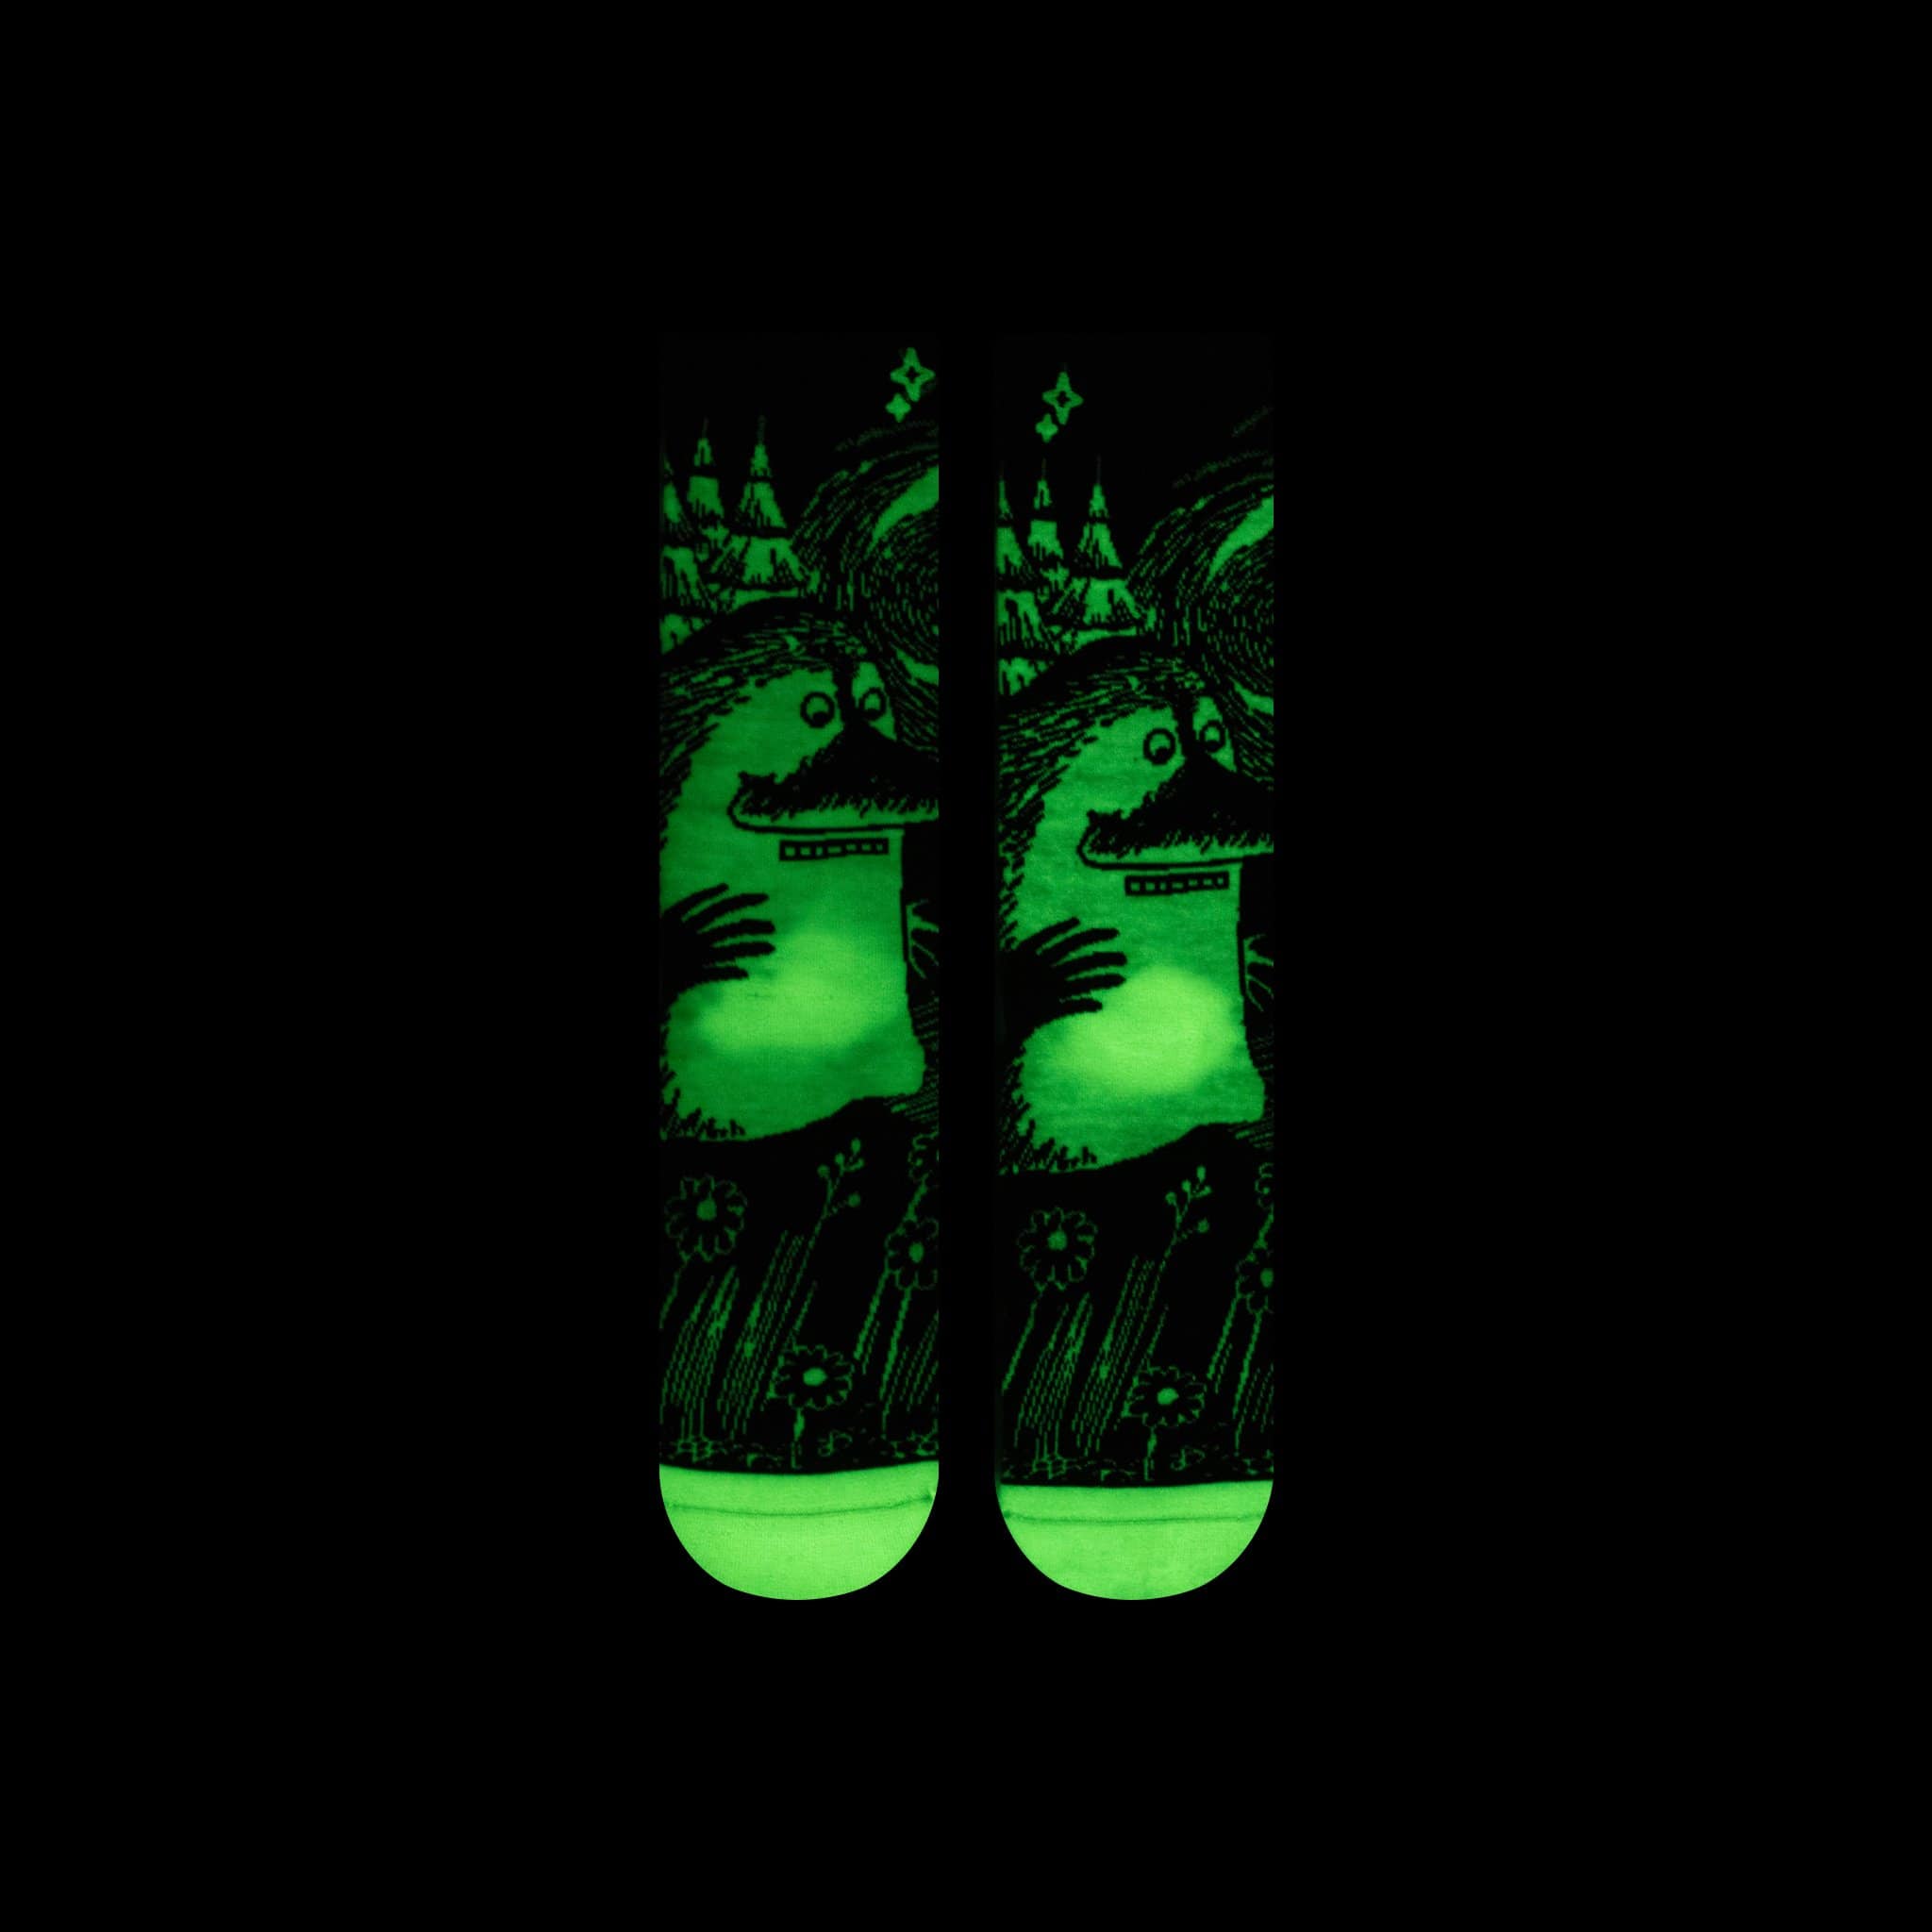 HUF Glow In The Dark Crew Sock, $14, .com